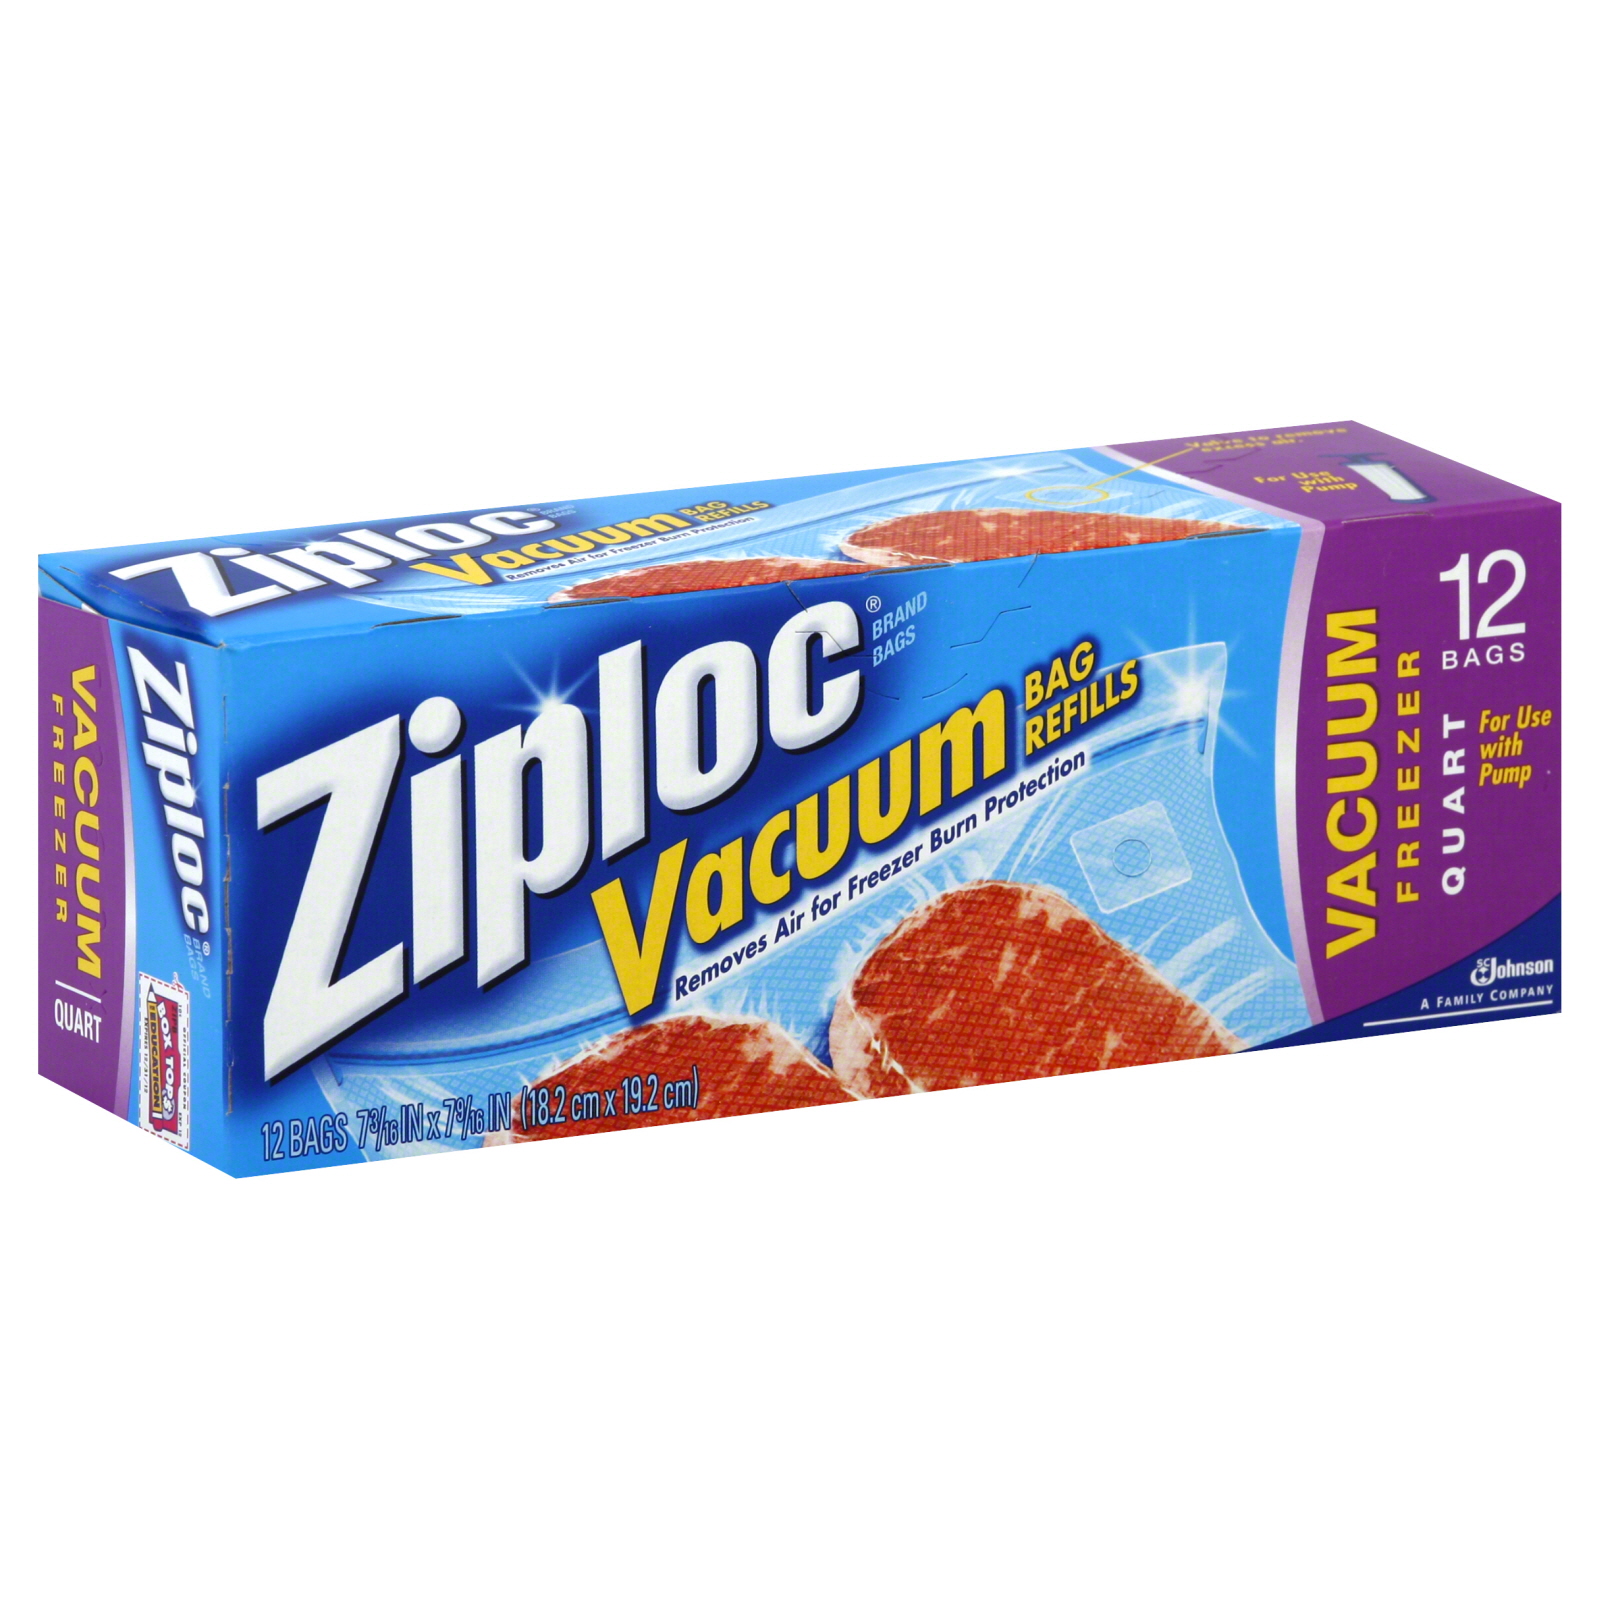 Ziploc Vacuum Bag Refills, Quart, 12 bags